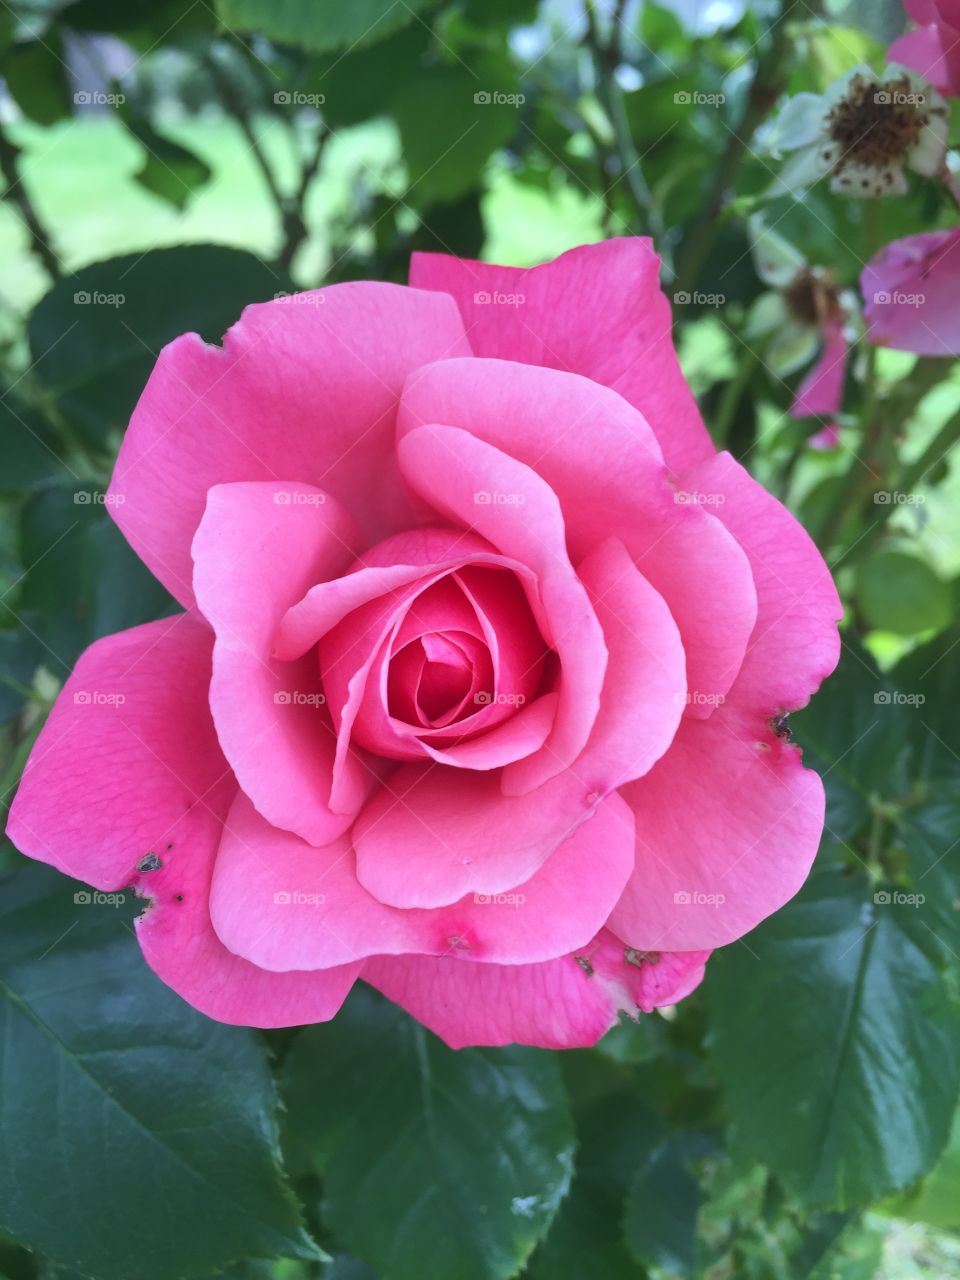 Rose in my garden 
